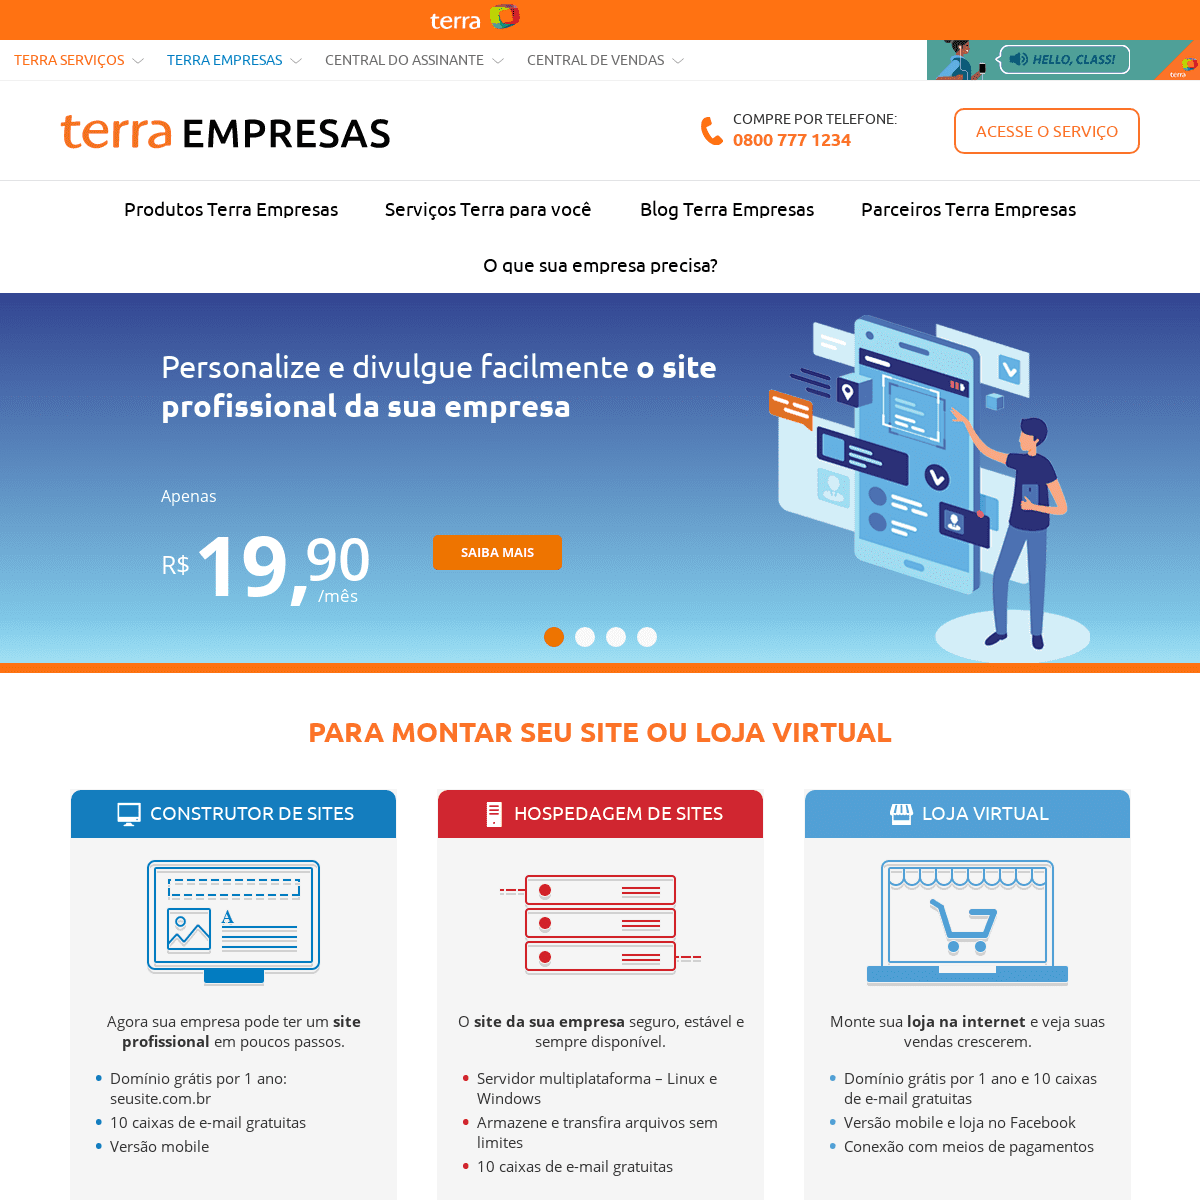 A complete backup of terraempresas.com.br